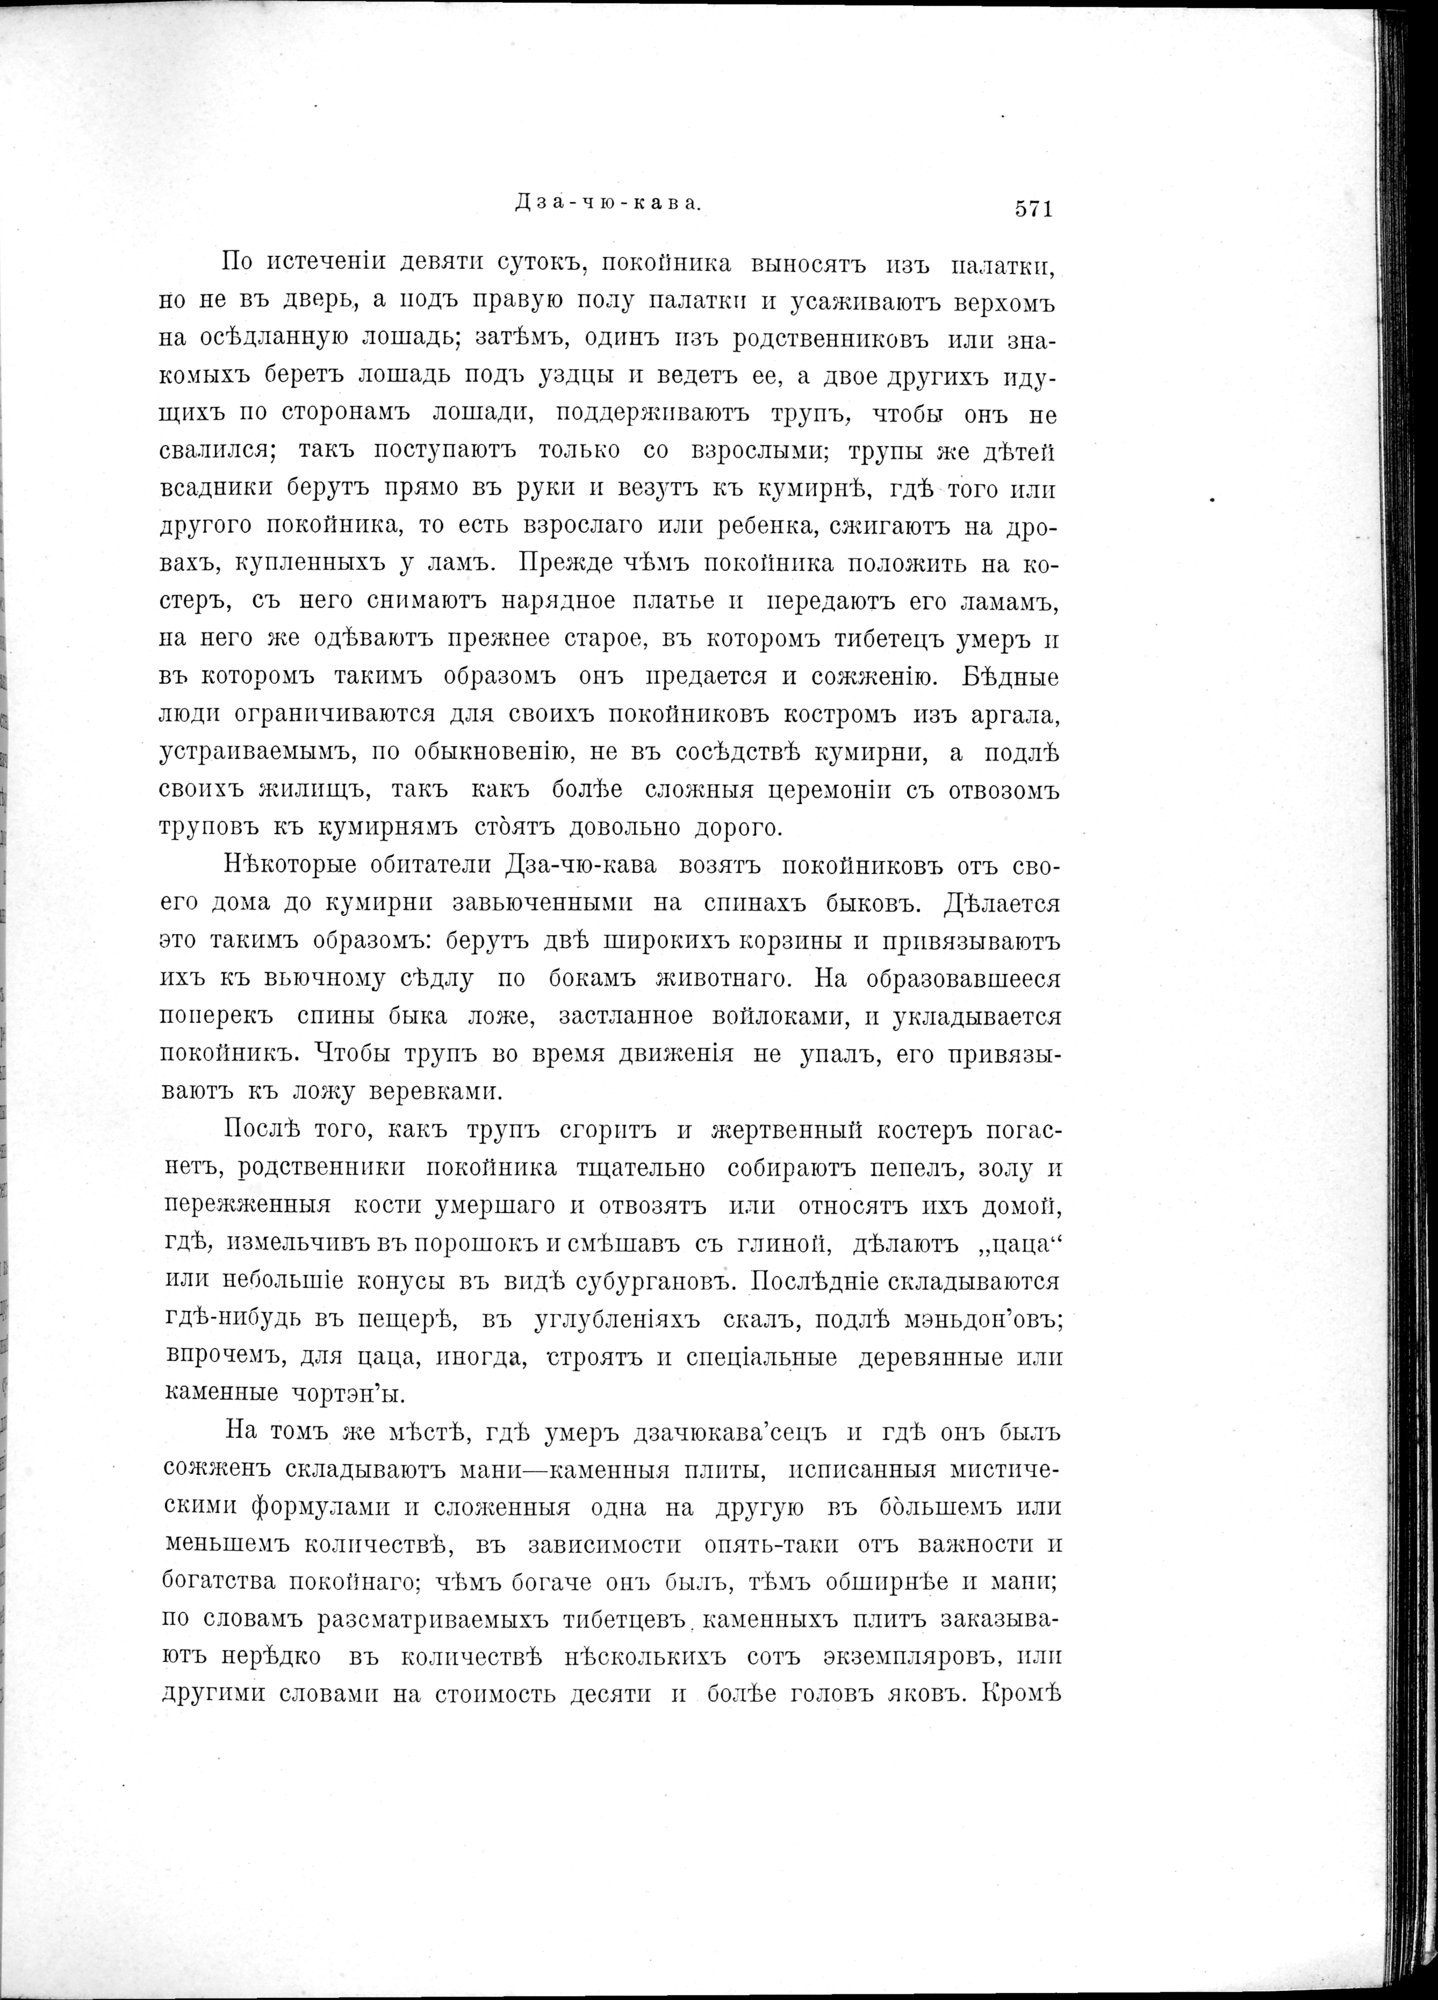 Mongoliia i Kam : vol.2 / Page 395 (Grayscale High Resolution Image)